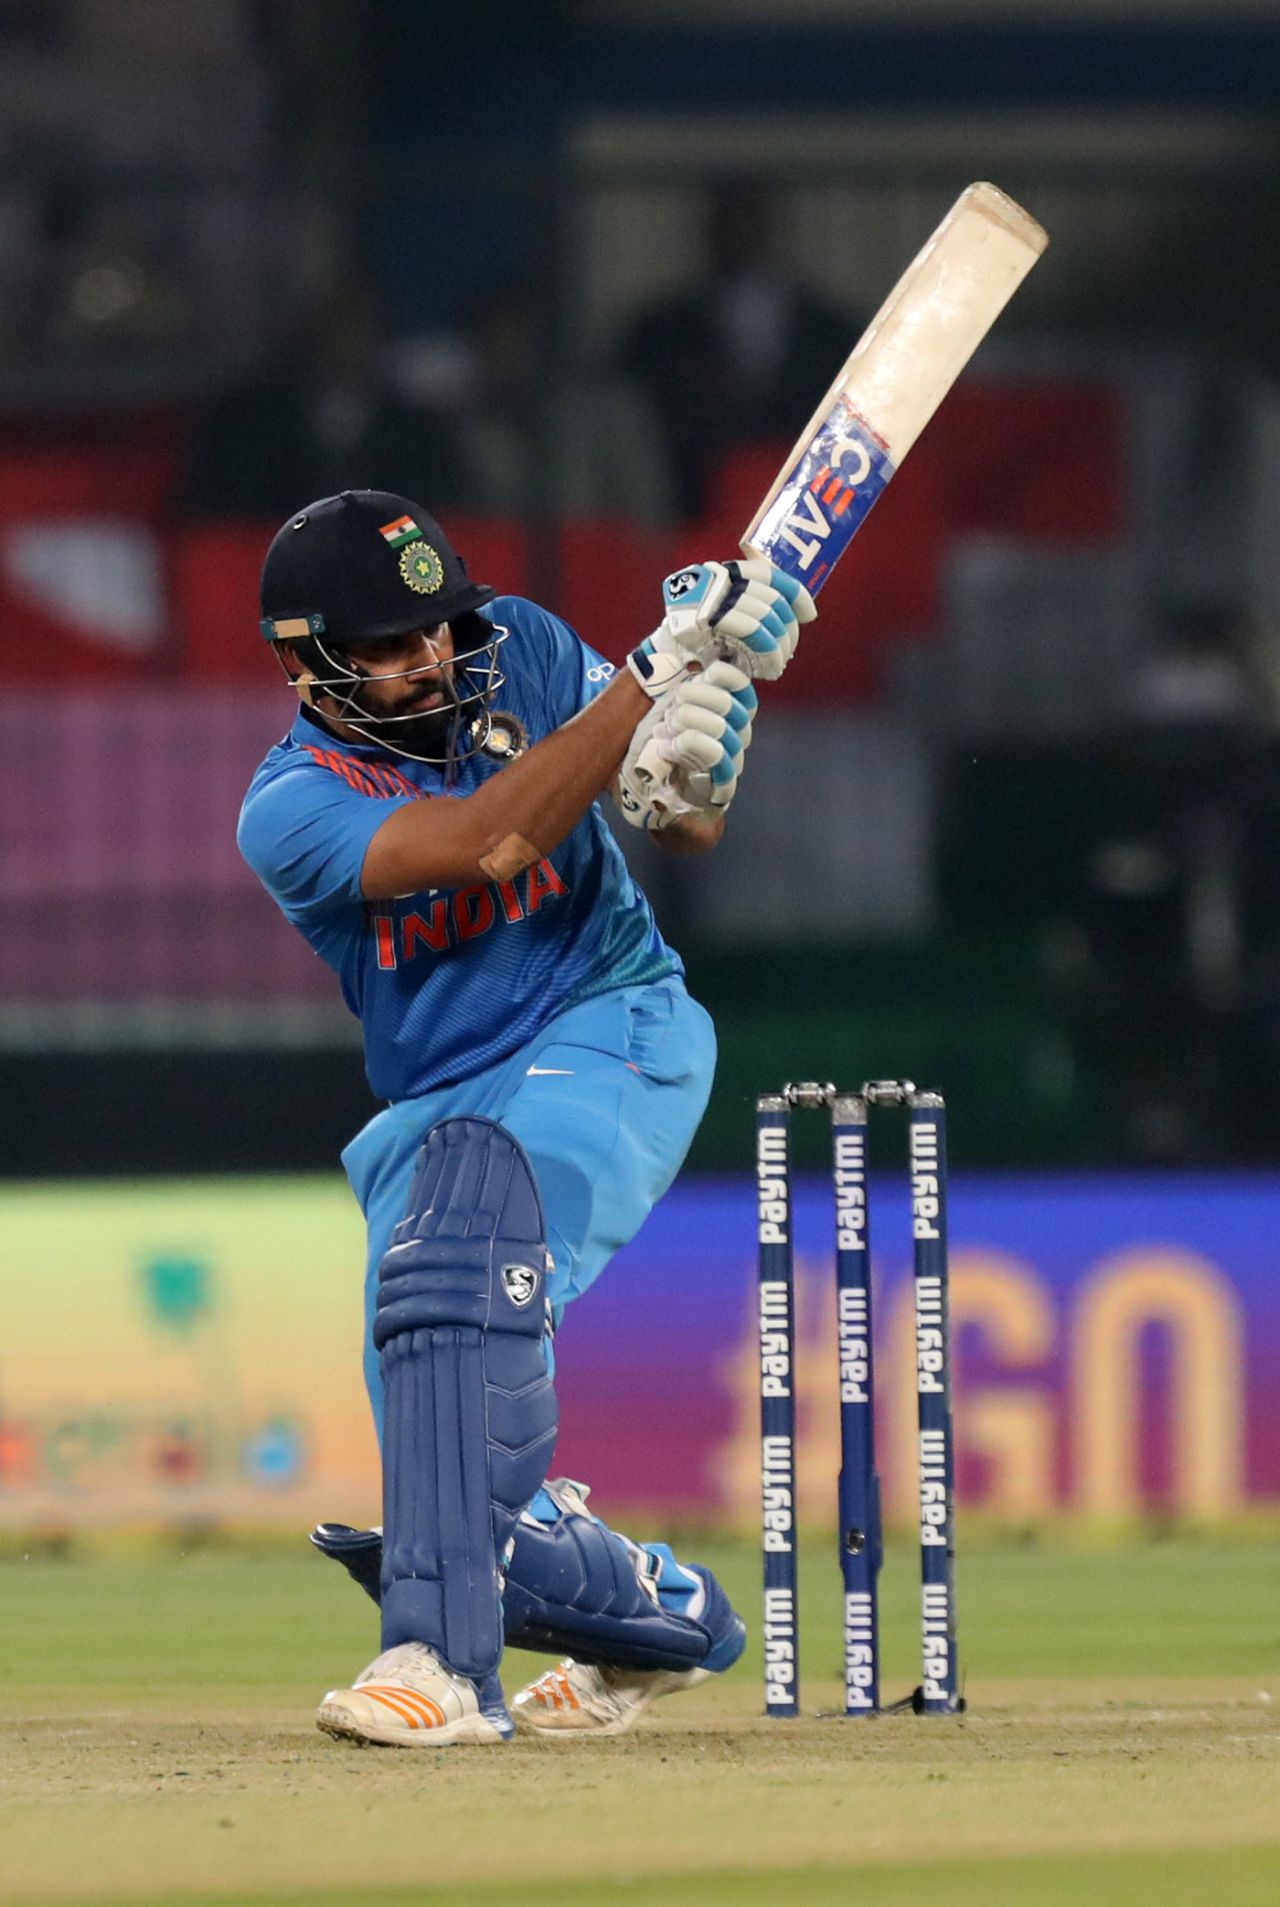 Rohit Sharma whips one behind square, India v Sri Lanka, 2nd T20I, Indore, December 22, 2017